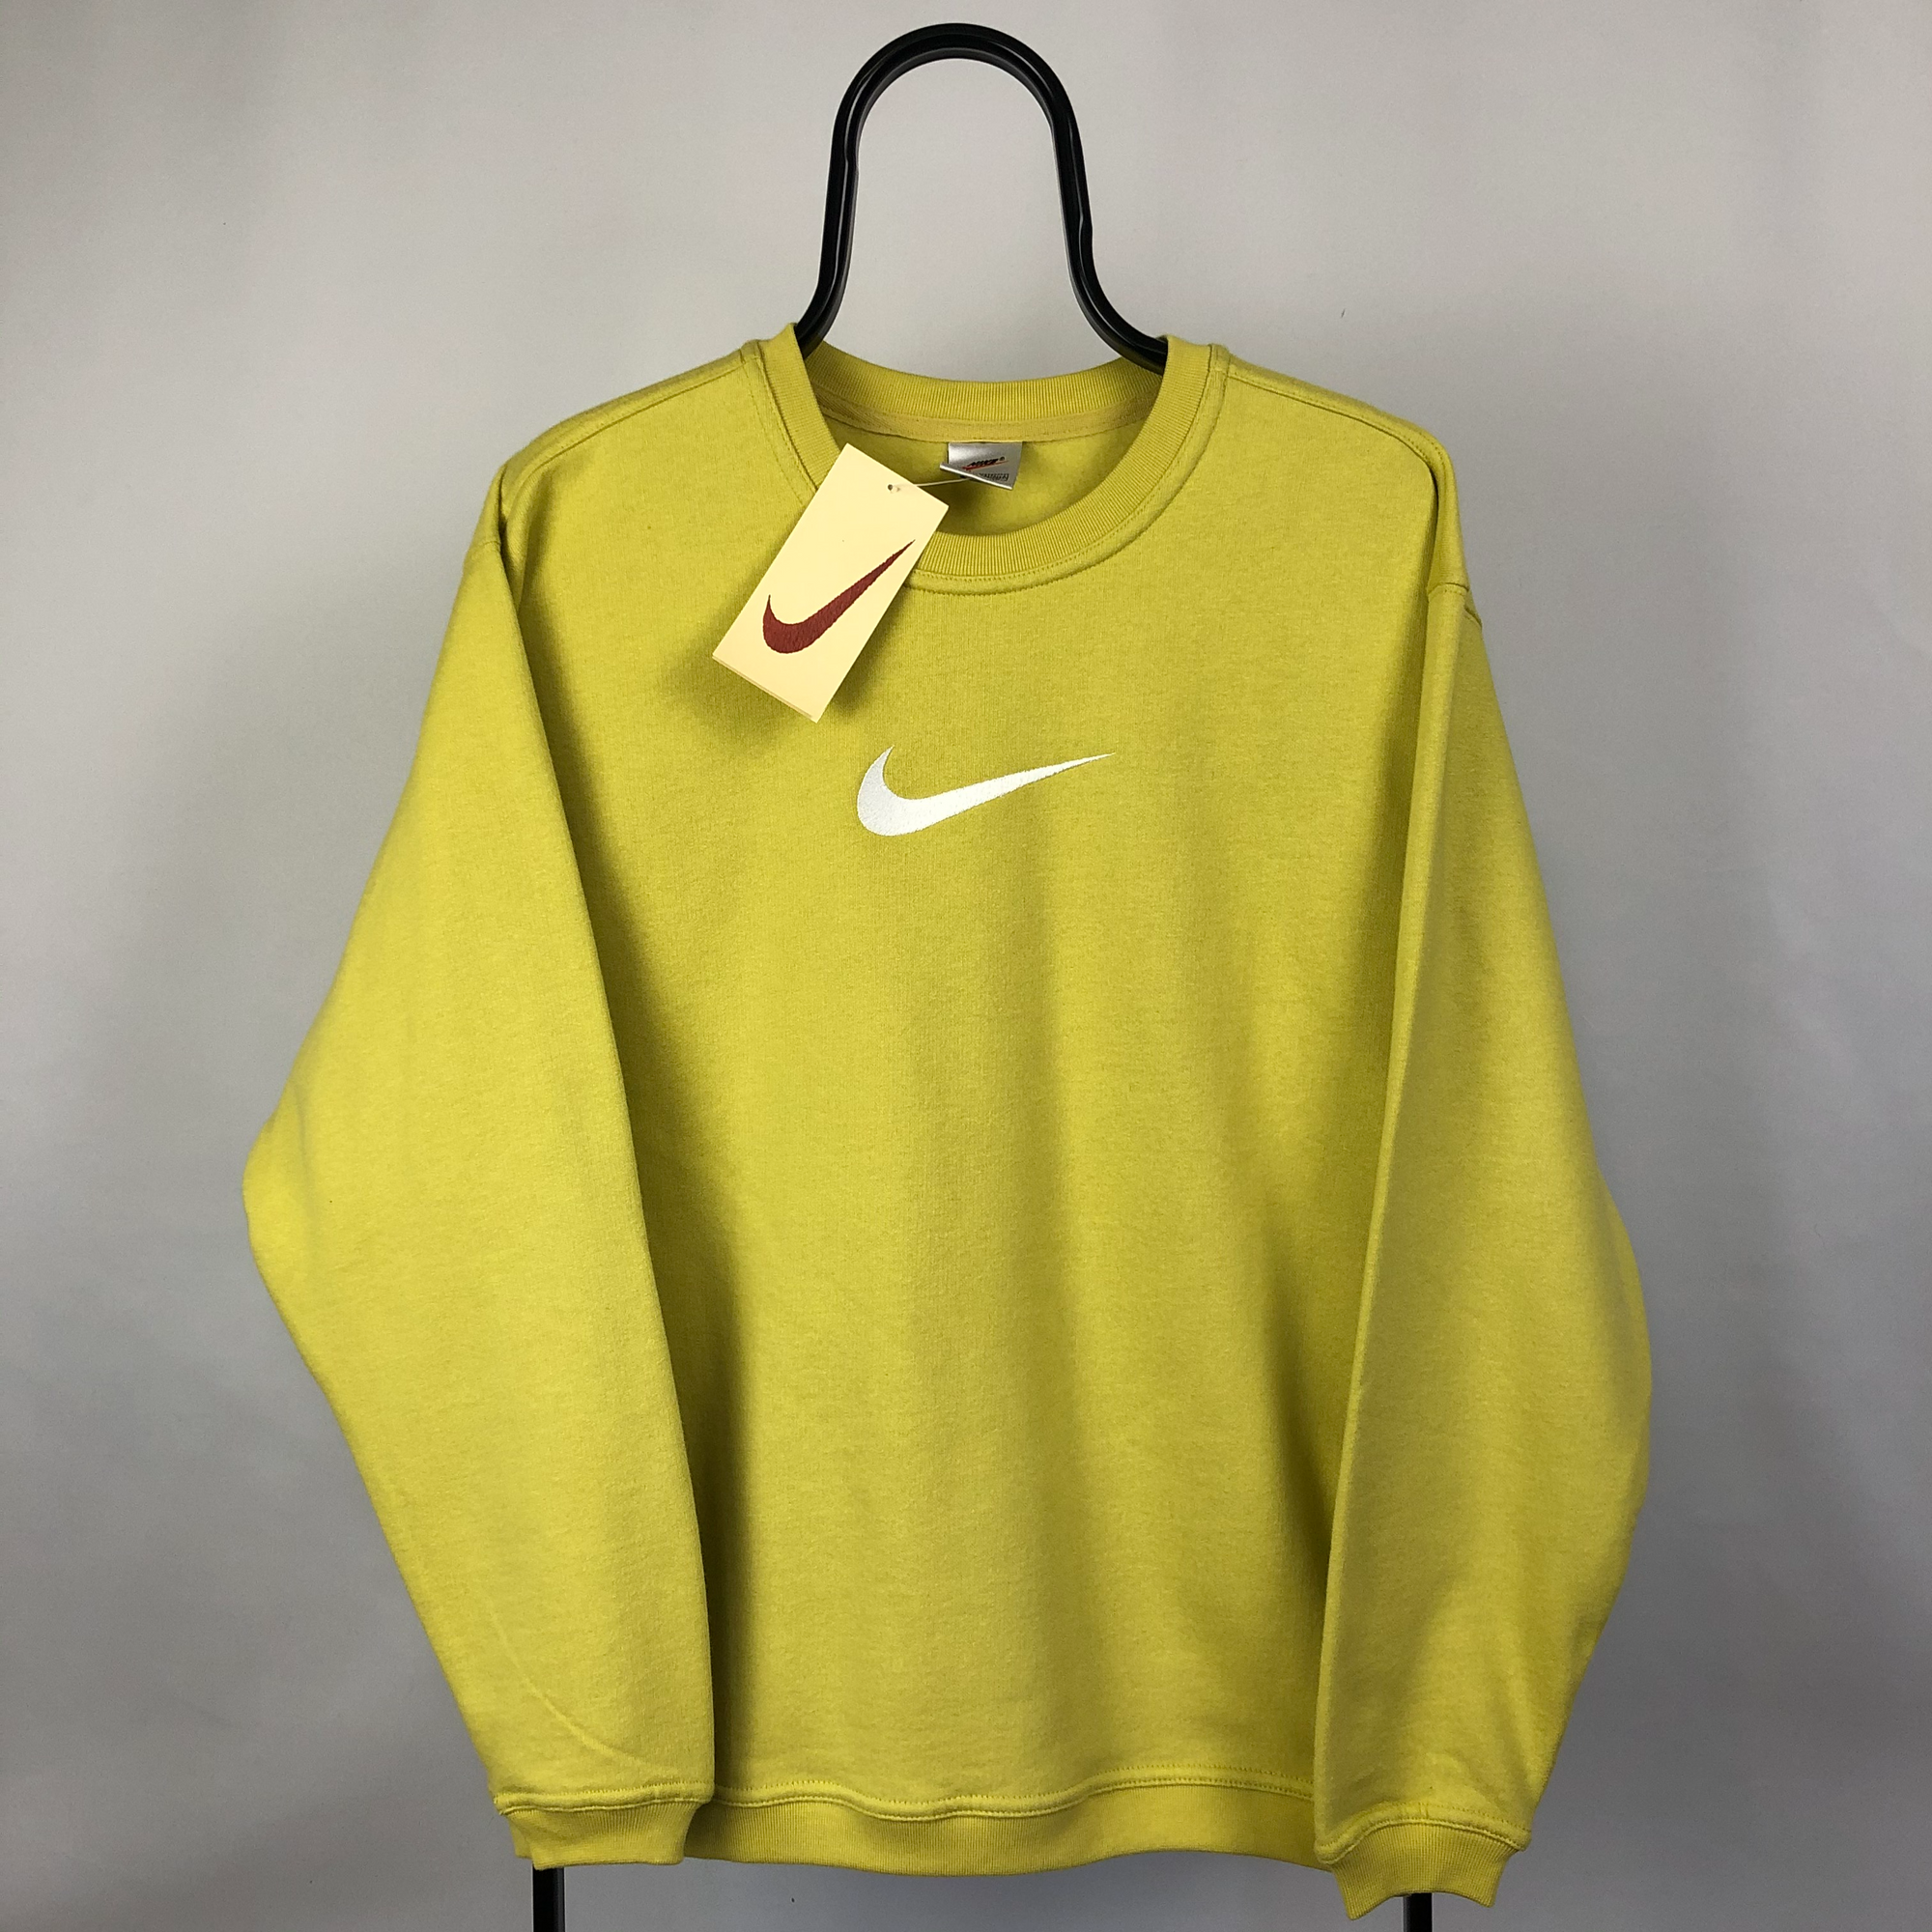 *DEADSTOCK* Nike Sweatshirt in Mustard Yellow - Men's Medium/Women's Large